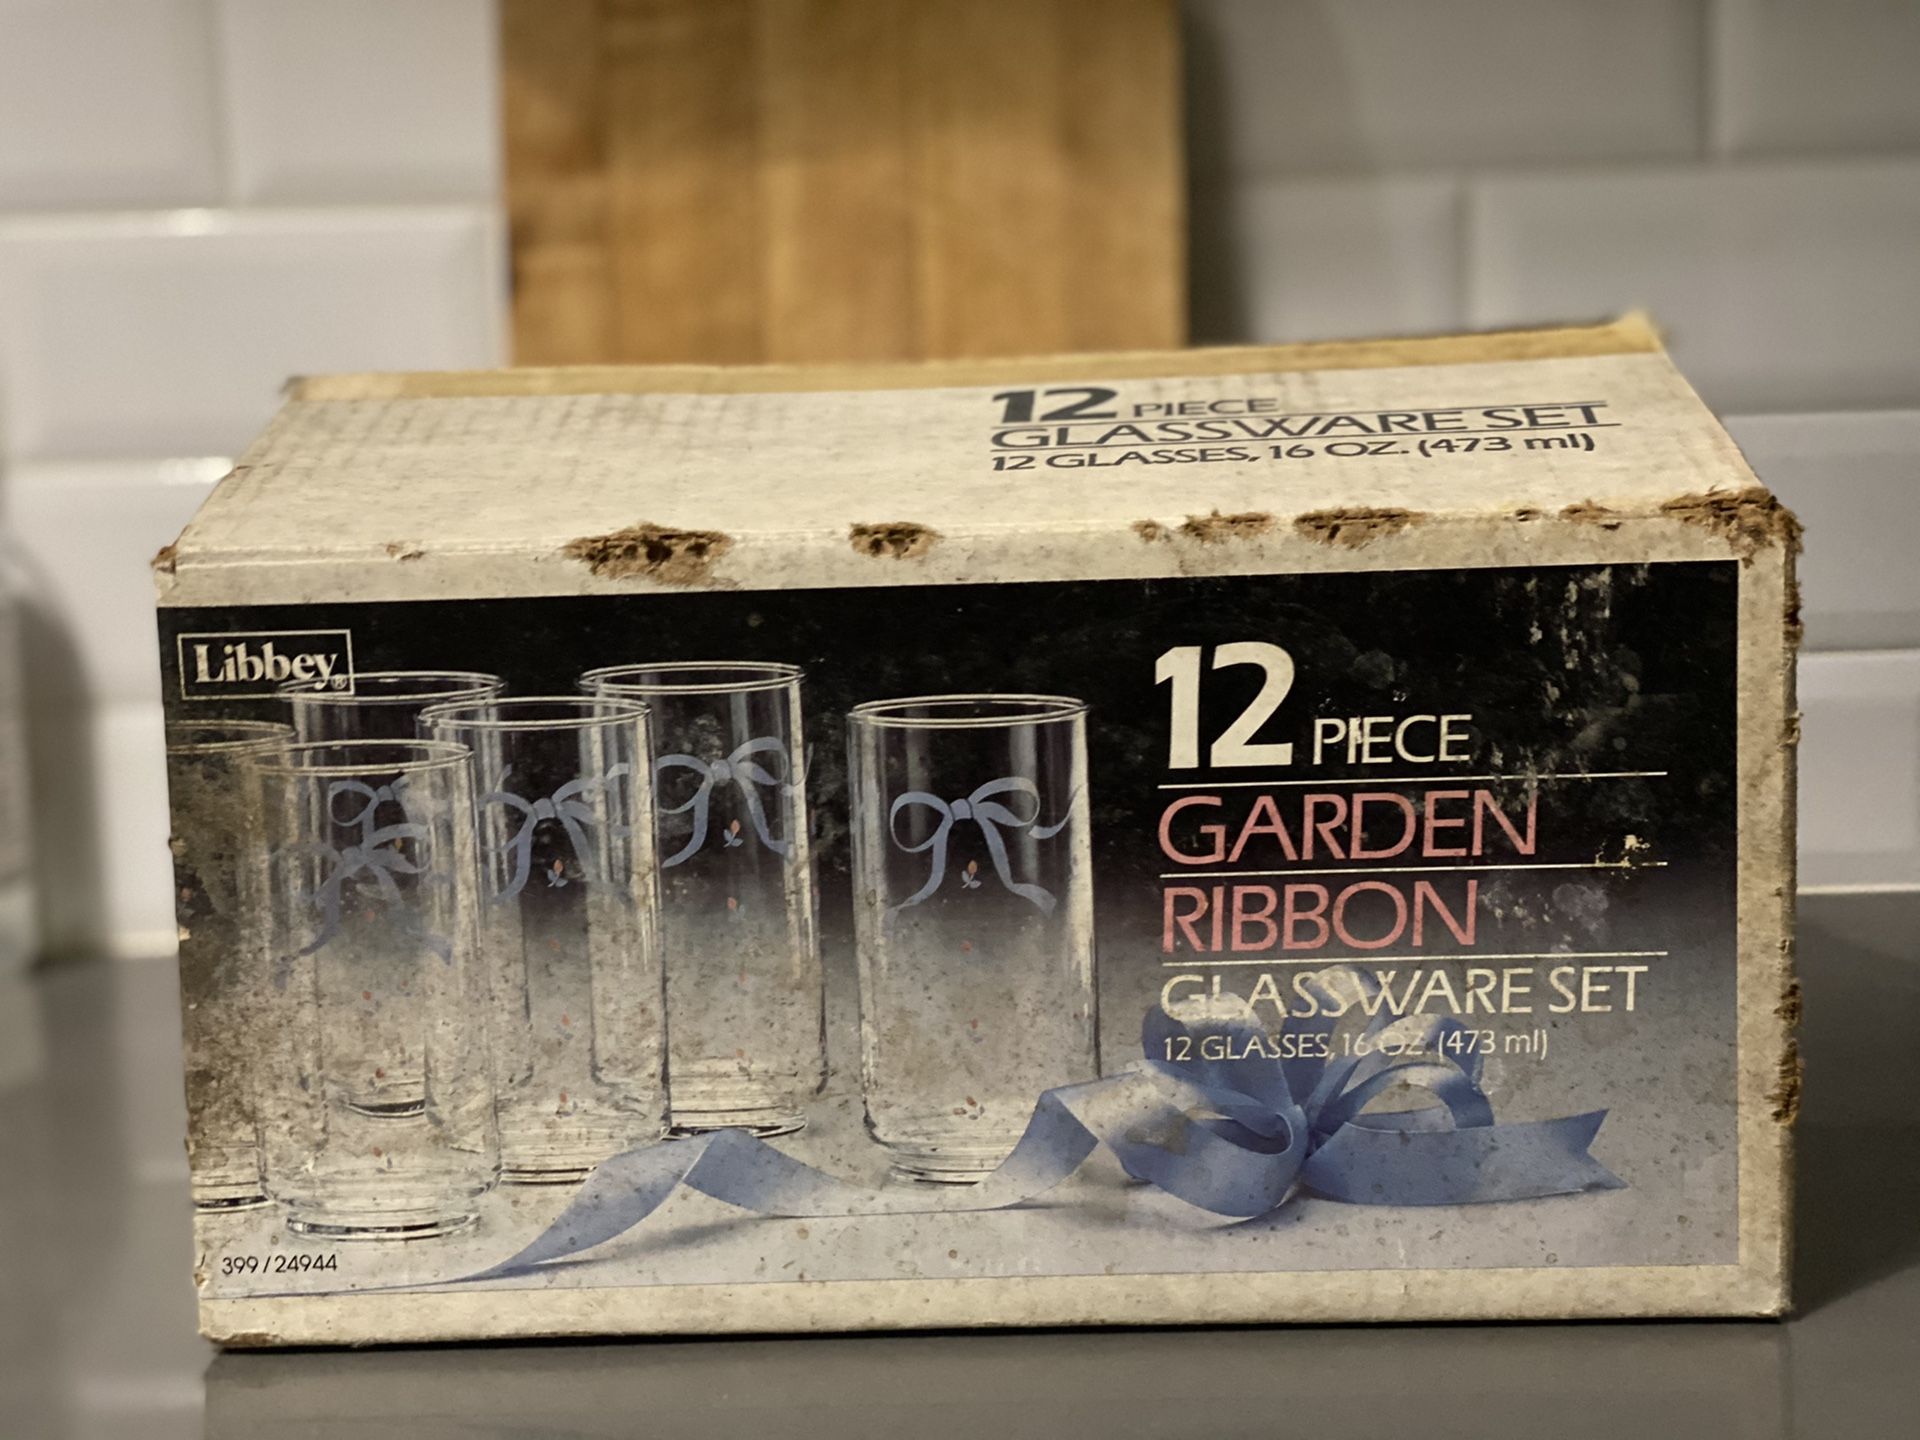 Libbey Vintage 12 piece glassware set, Garden Ribbon Pattern